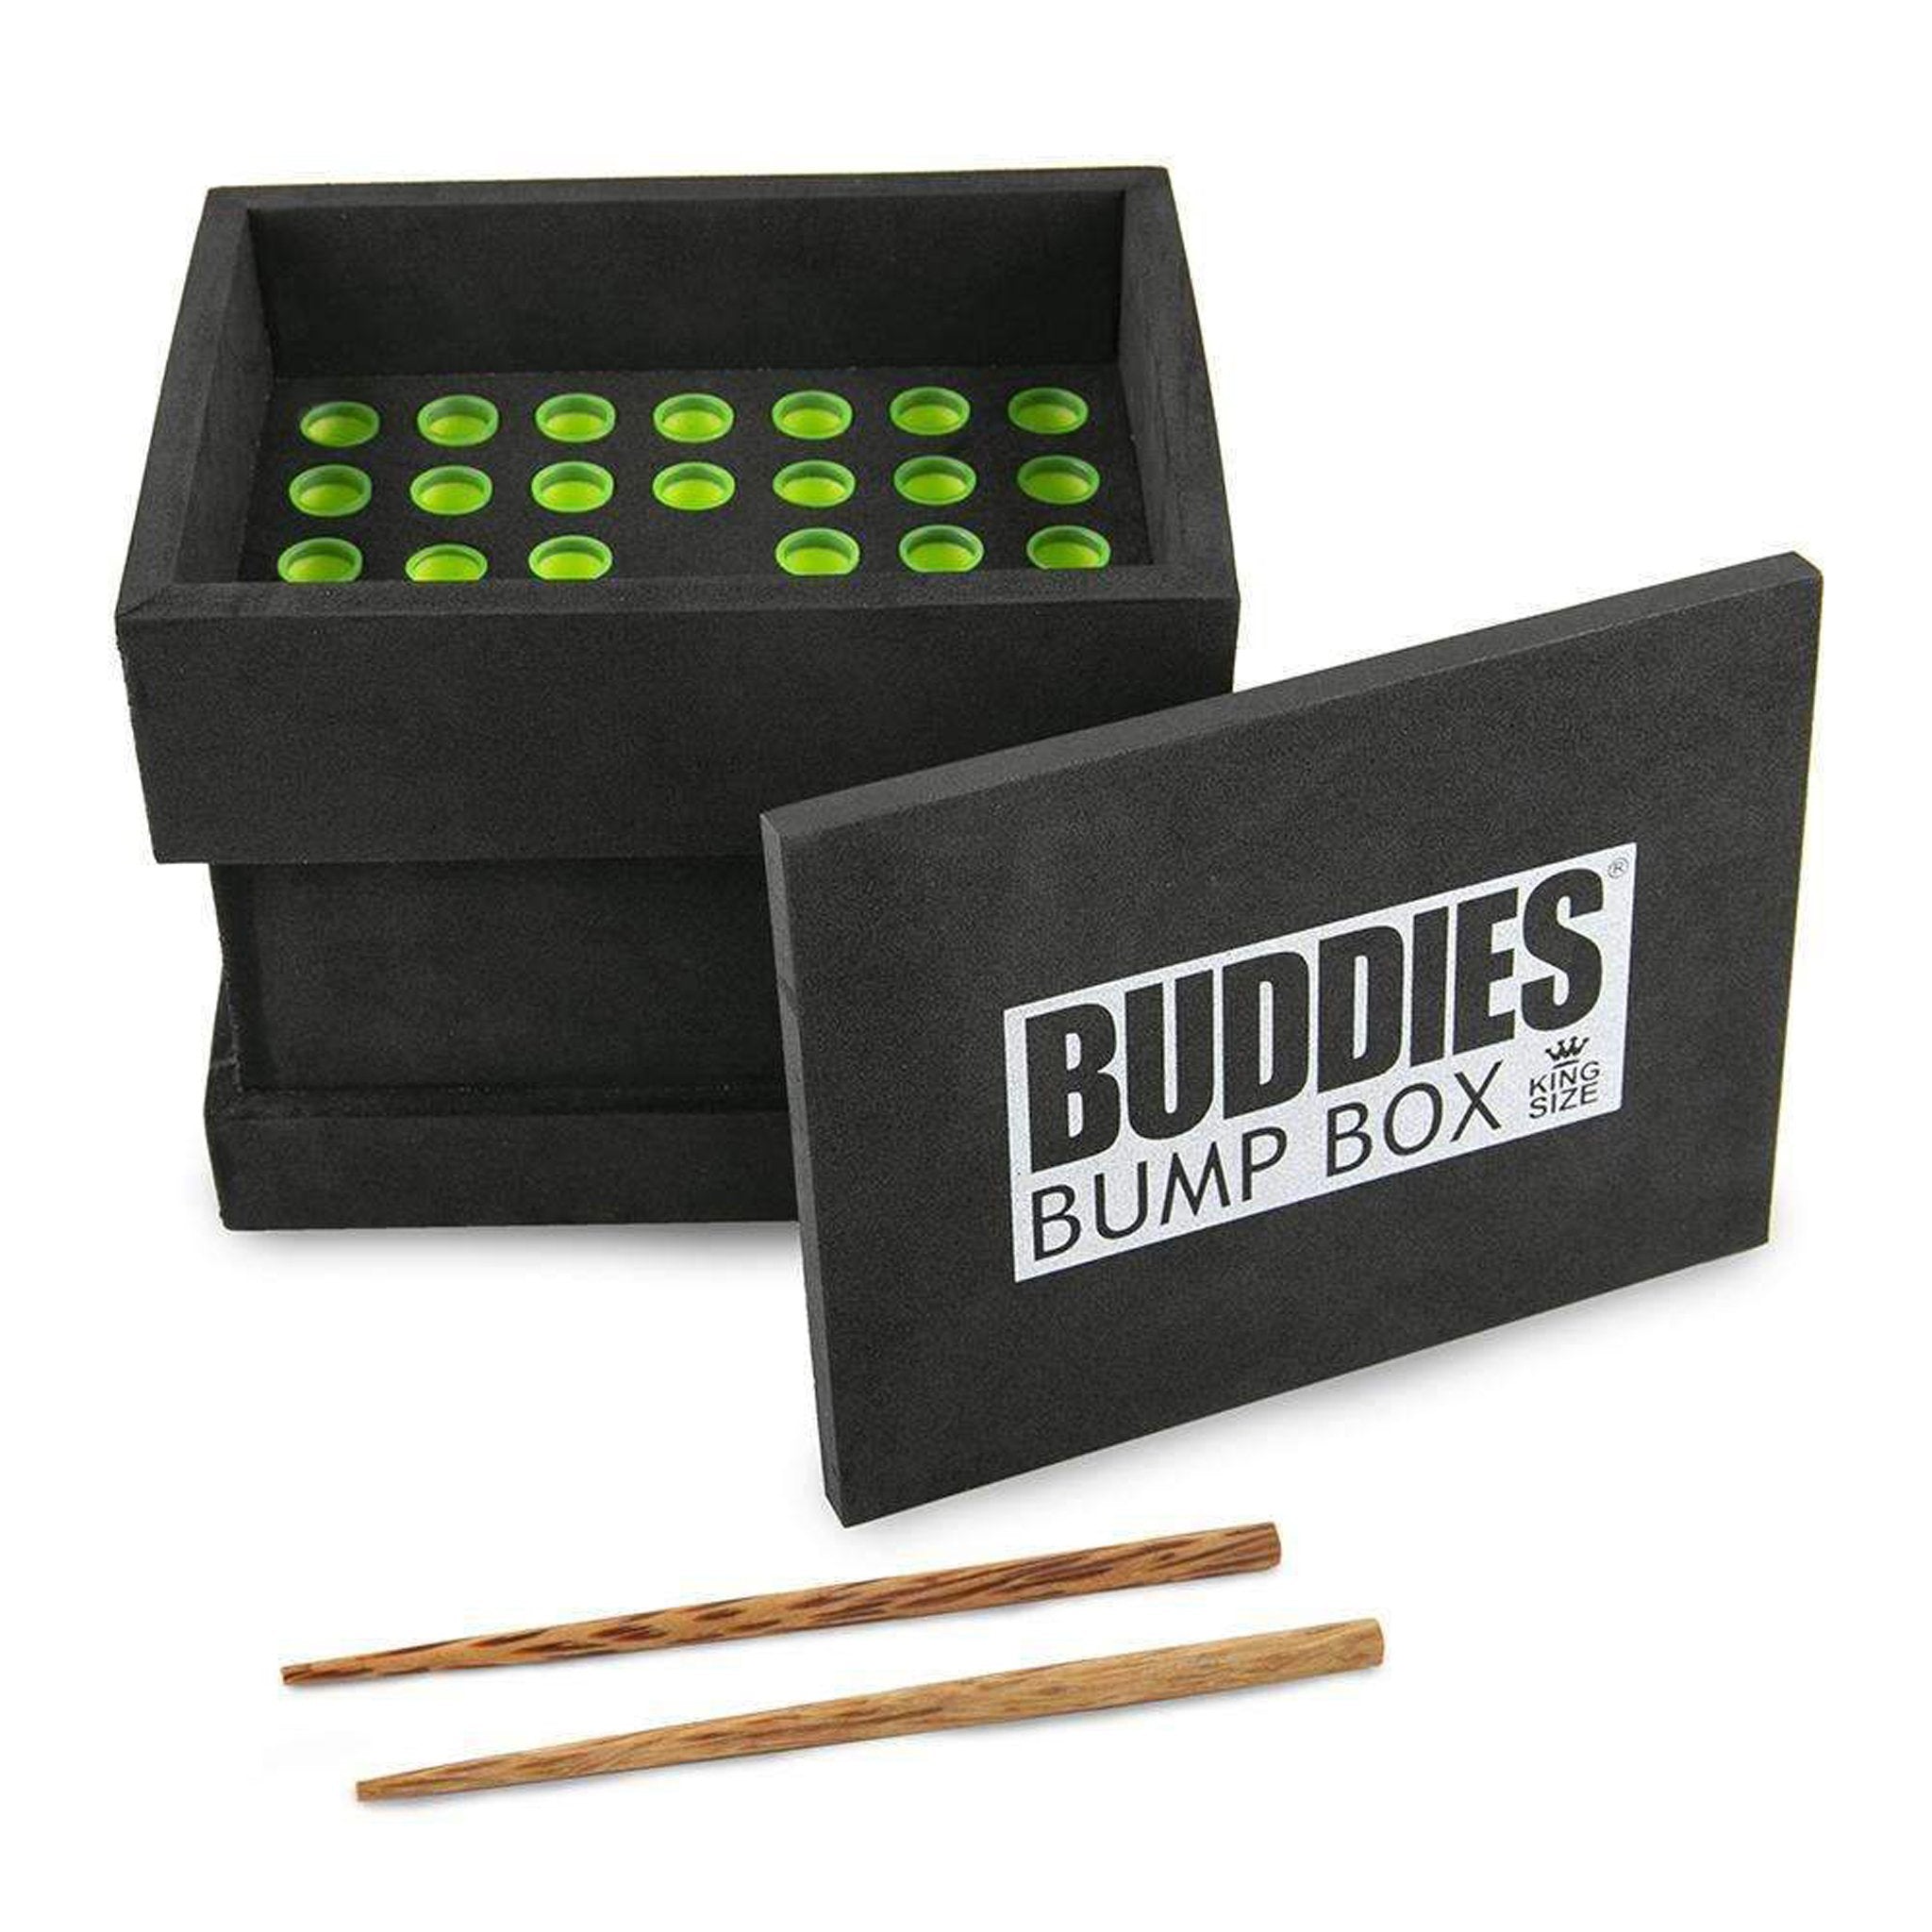 Buddies Bump Box - 6.5in